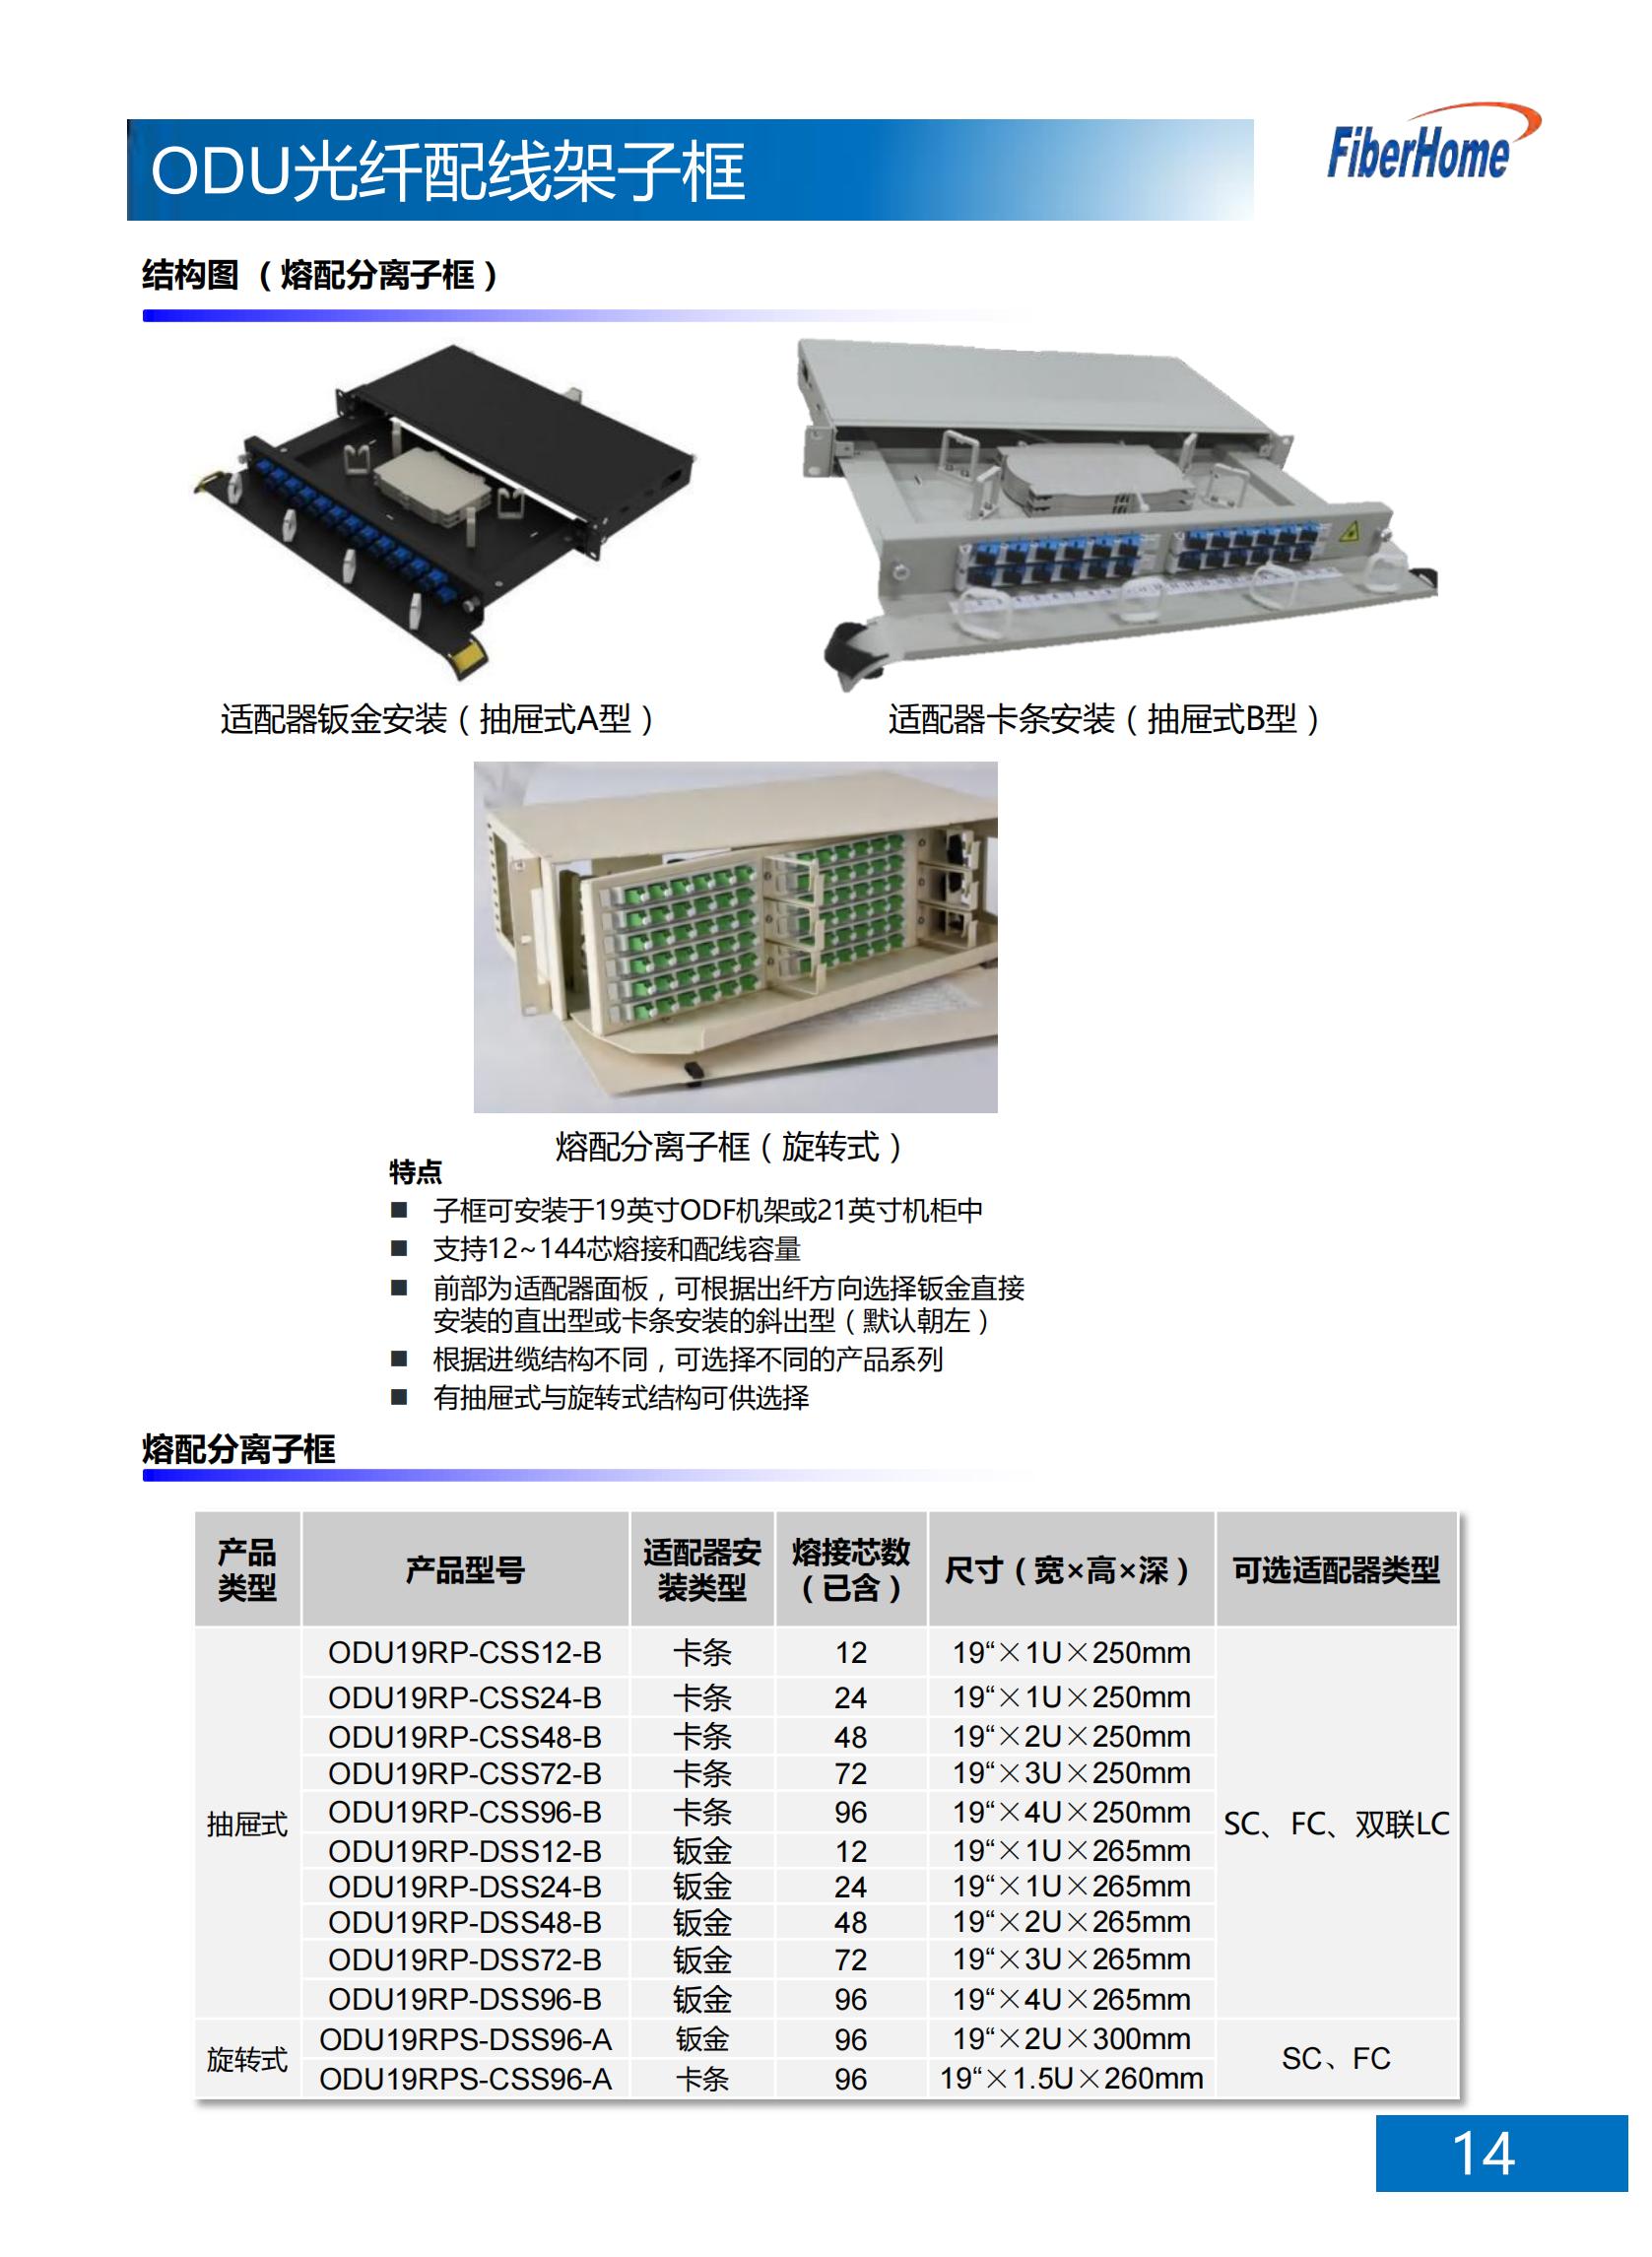 24-core ODU optical fiber distribution frame ODU19T-A24-A-SC (including 12-core SC fusion and distribution integrated unit*2)